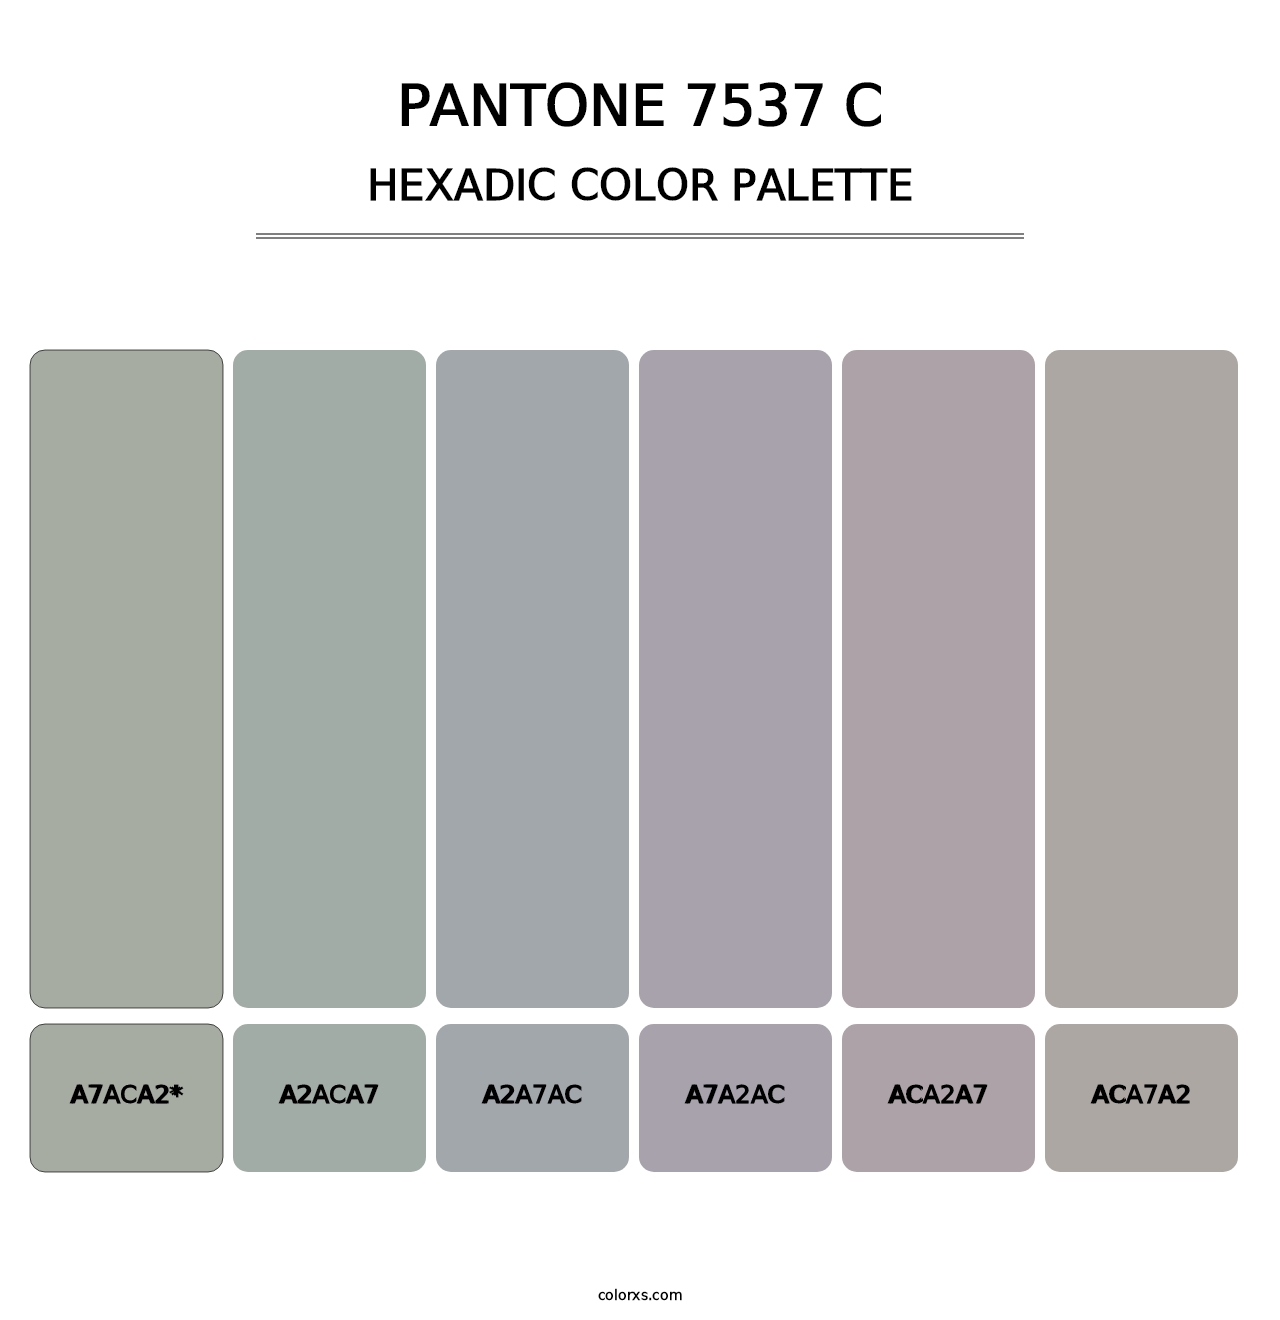 PANTONE 7537 C - Hexadic Color Palette